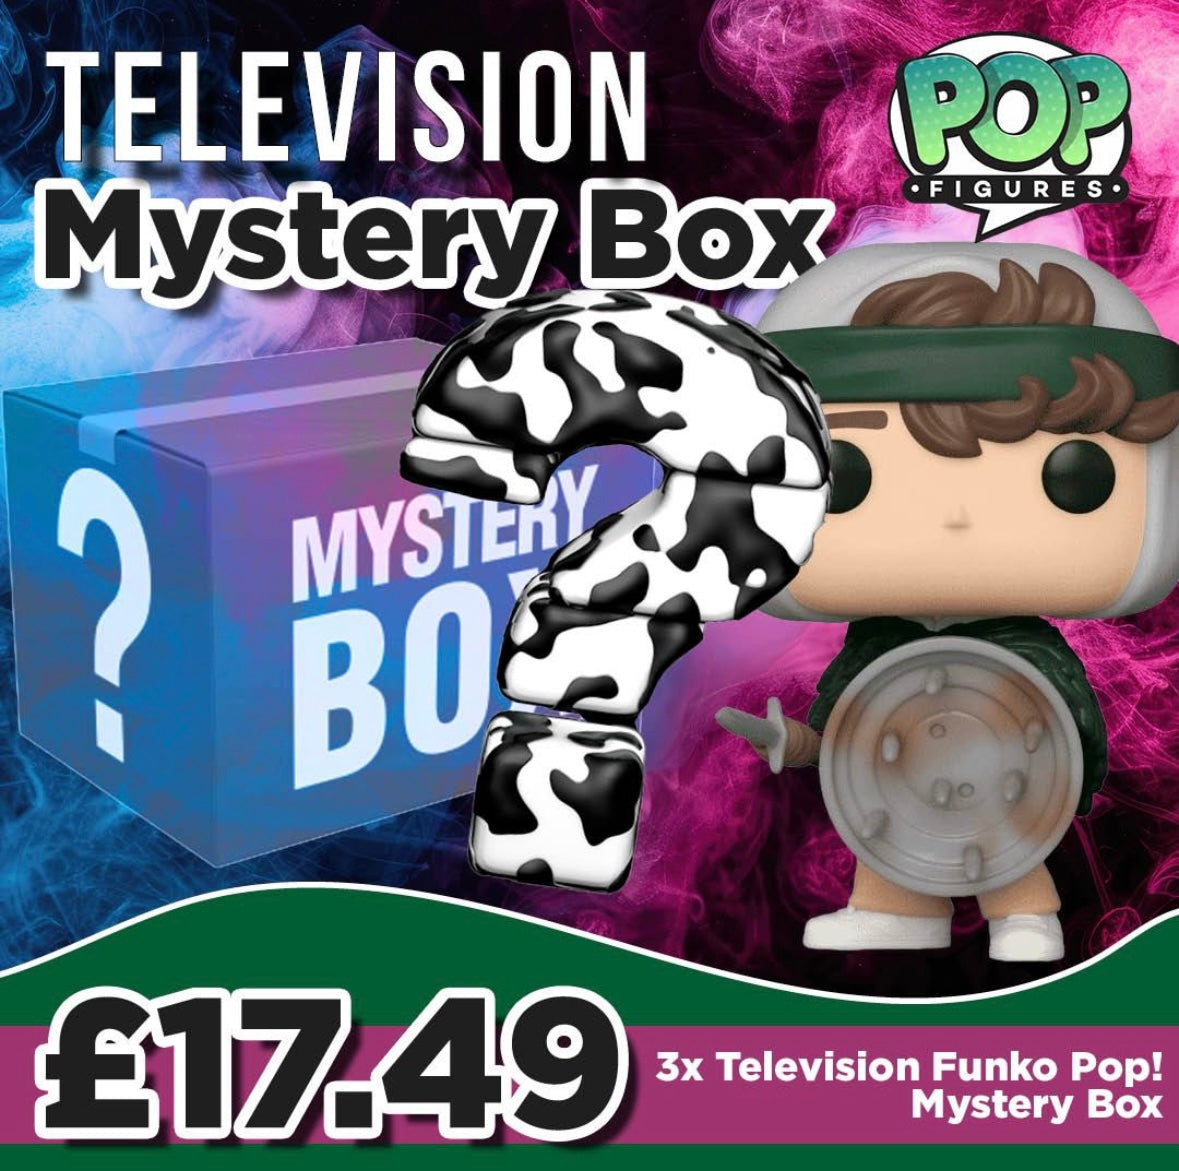 3 Television Funko Pop Mystery Box!